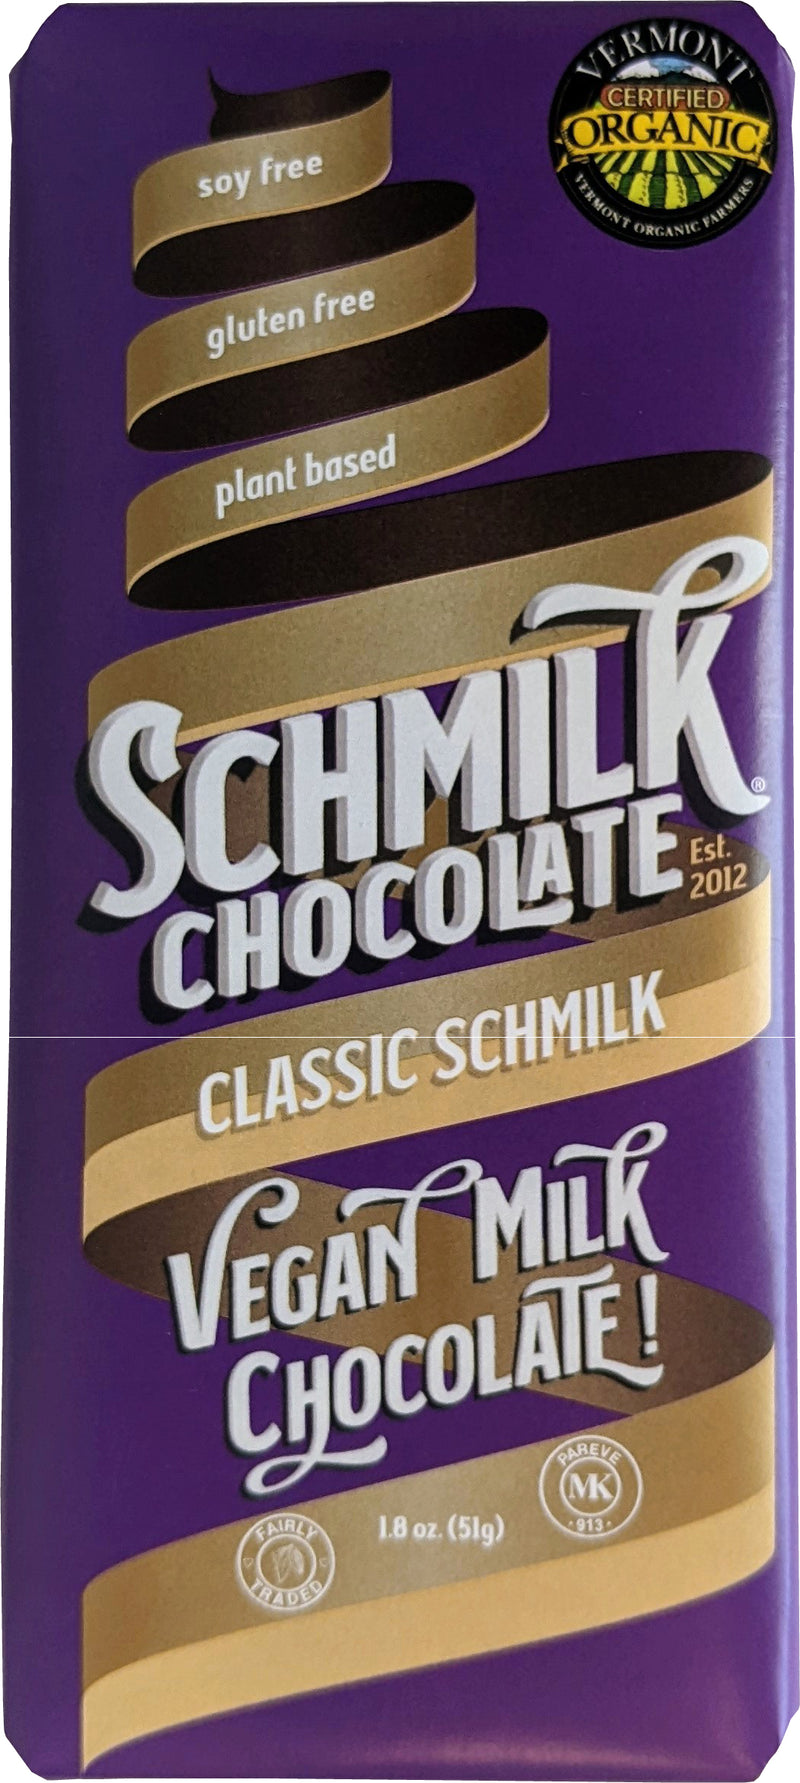 Healthy Vegan Chocolate Milk - The Dairy-Free Menu